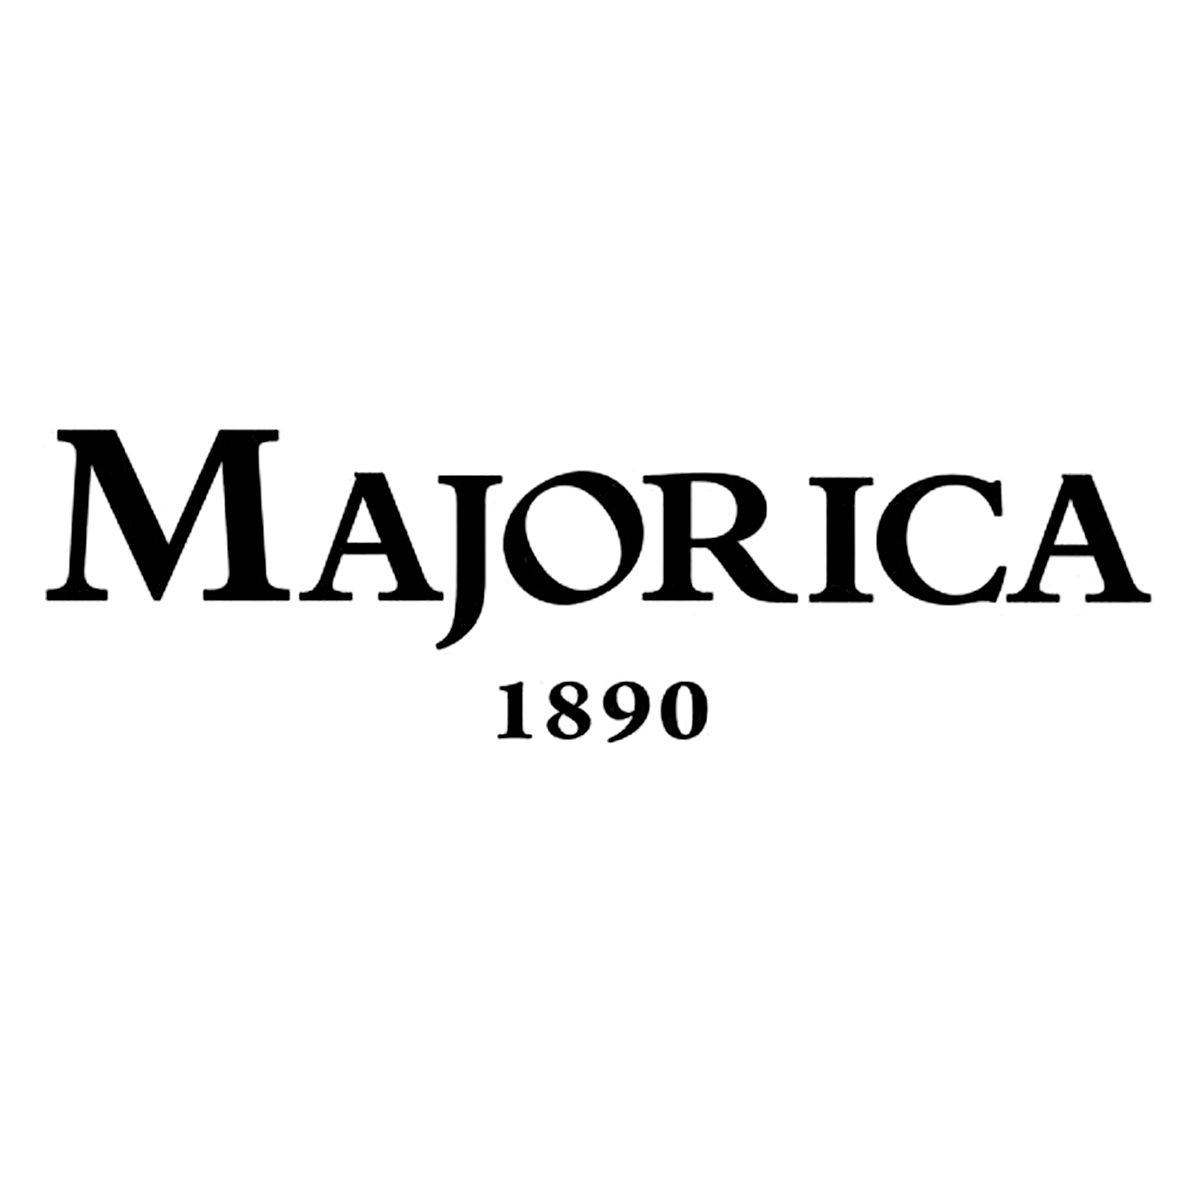 majorica-logo._V391009820_.jpg